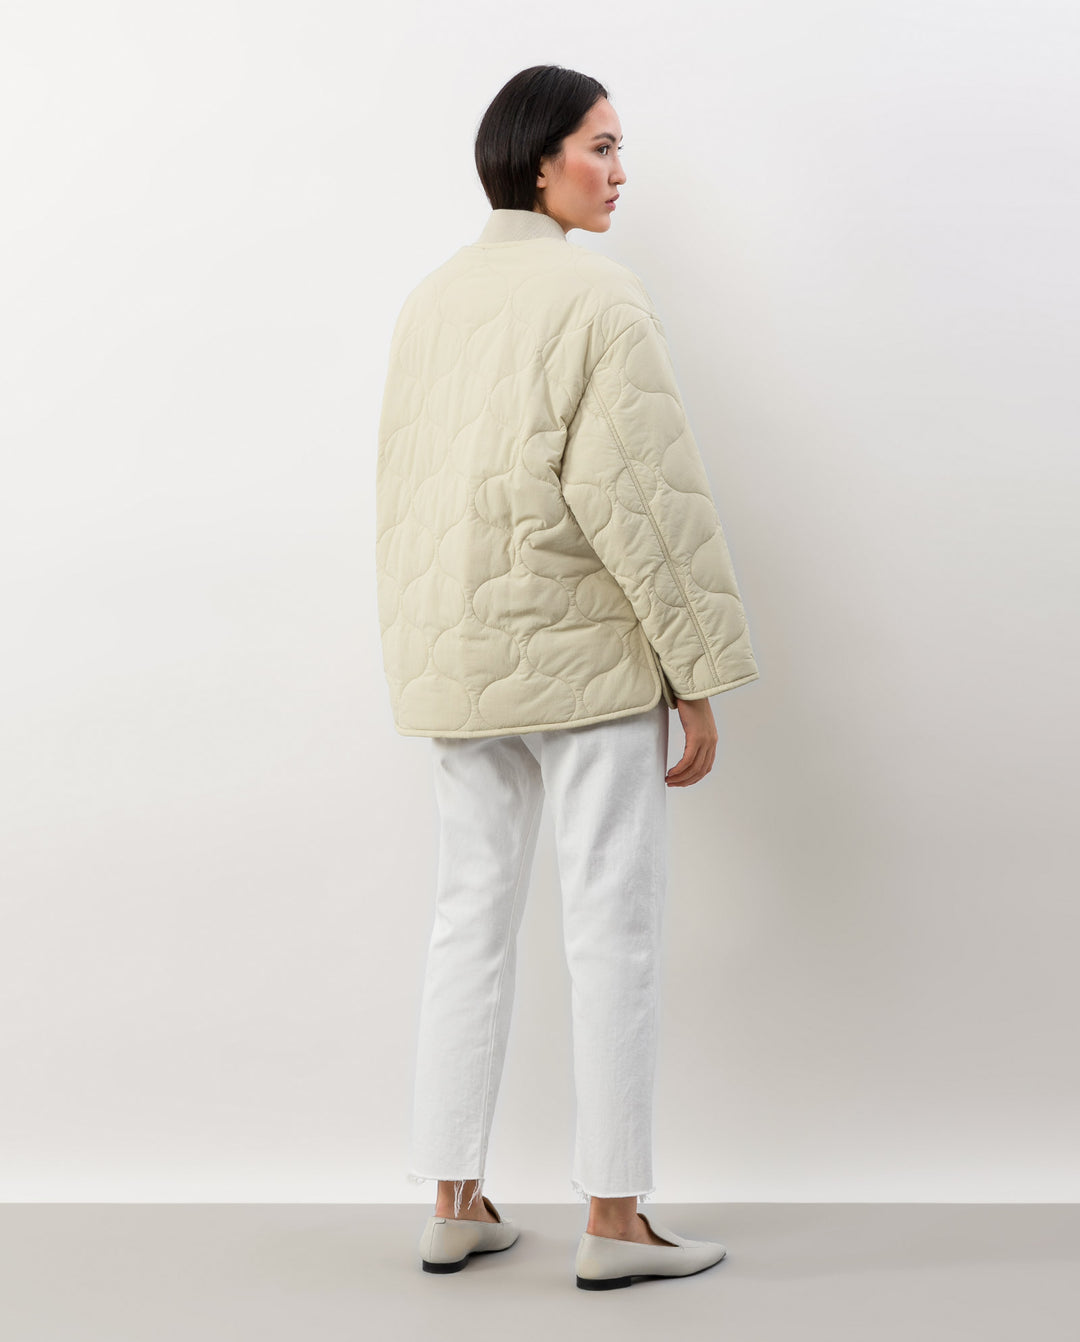 Chiara Ann jacket in light svannah